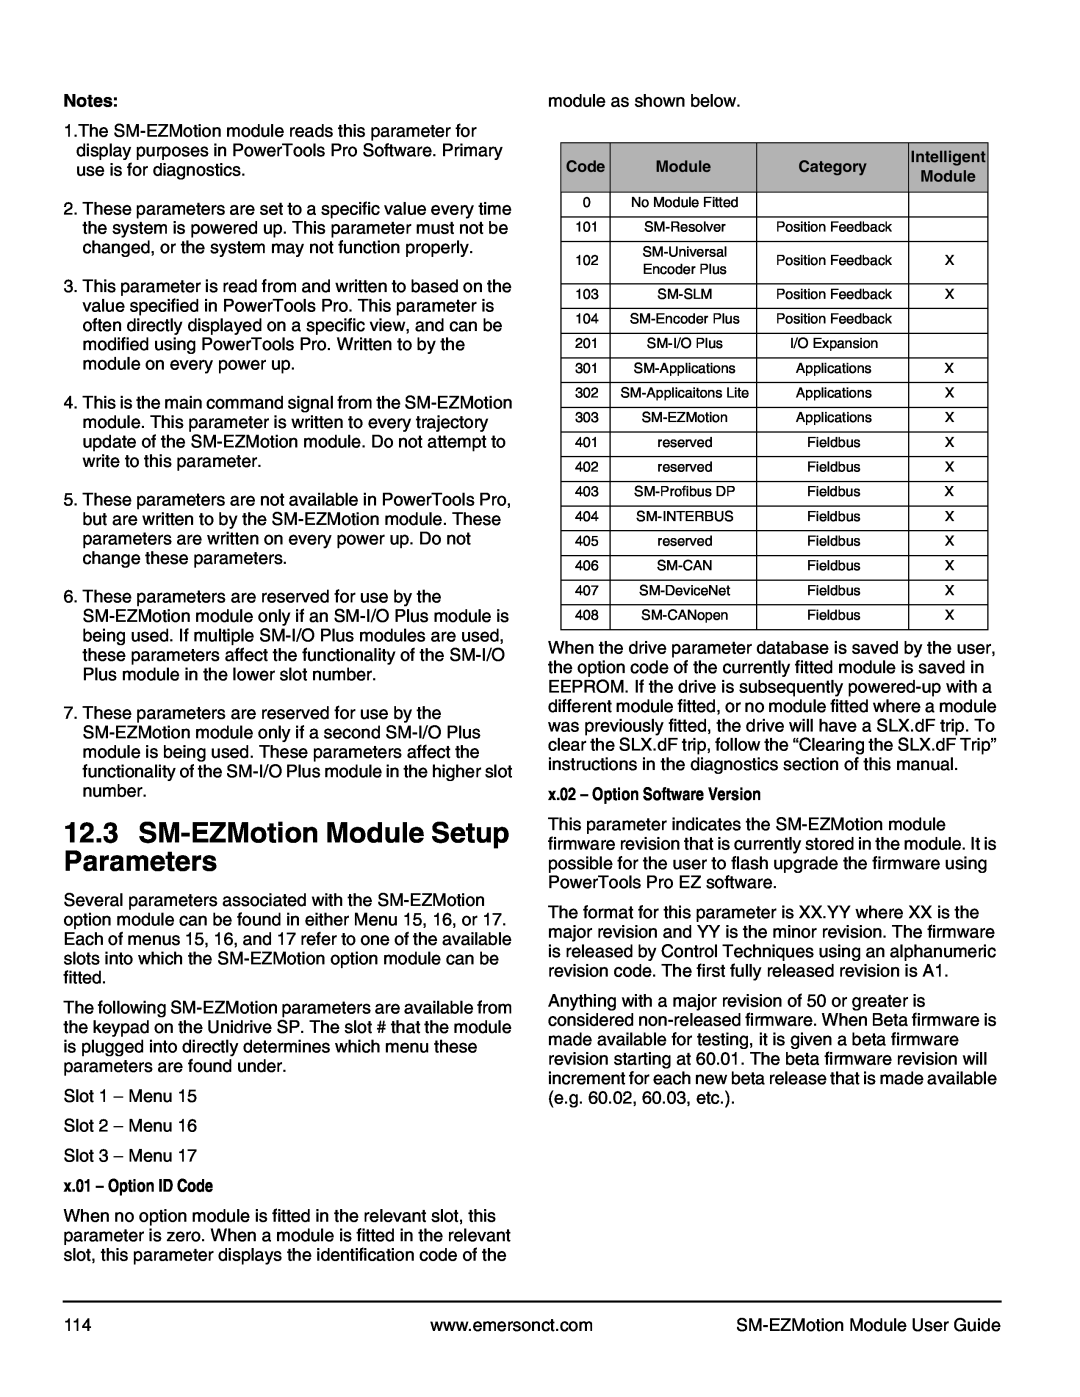 Emerson P/N 400361-00 manual SM-EZMotion Module Setup Parameters, x.01 - Option ID Code, x.02 - Option Software Version 